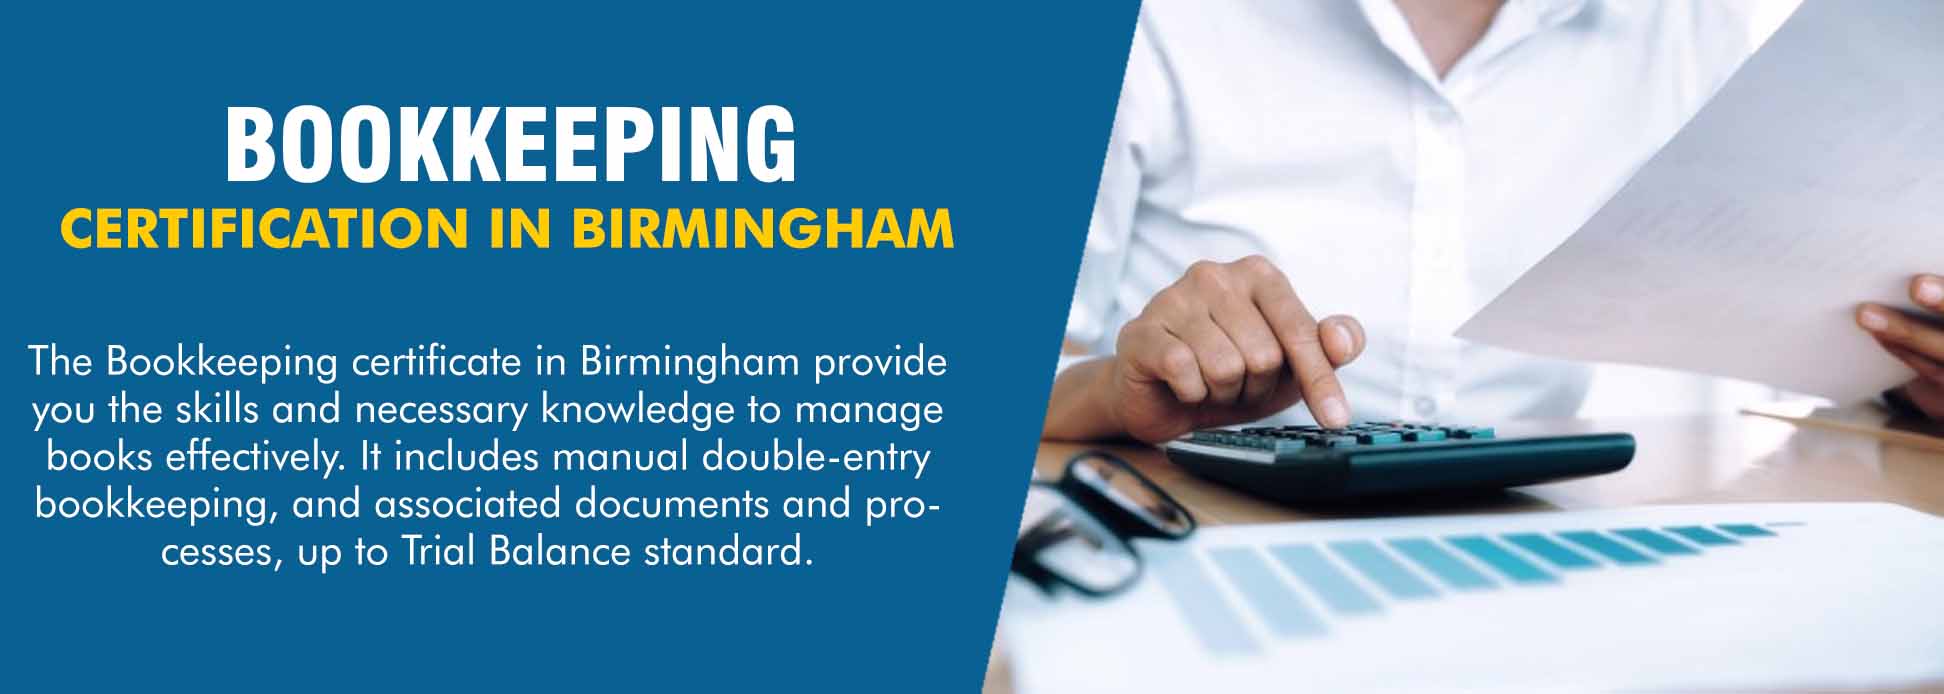 bookkeeping-certification-in-birmingham